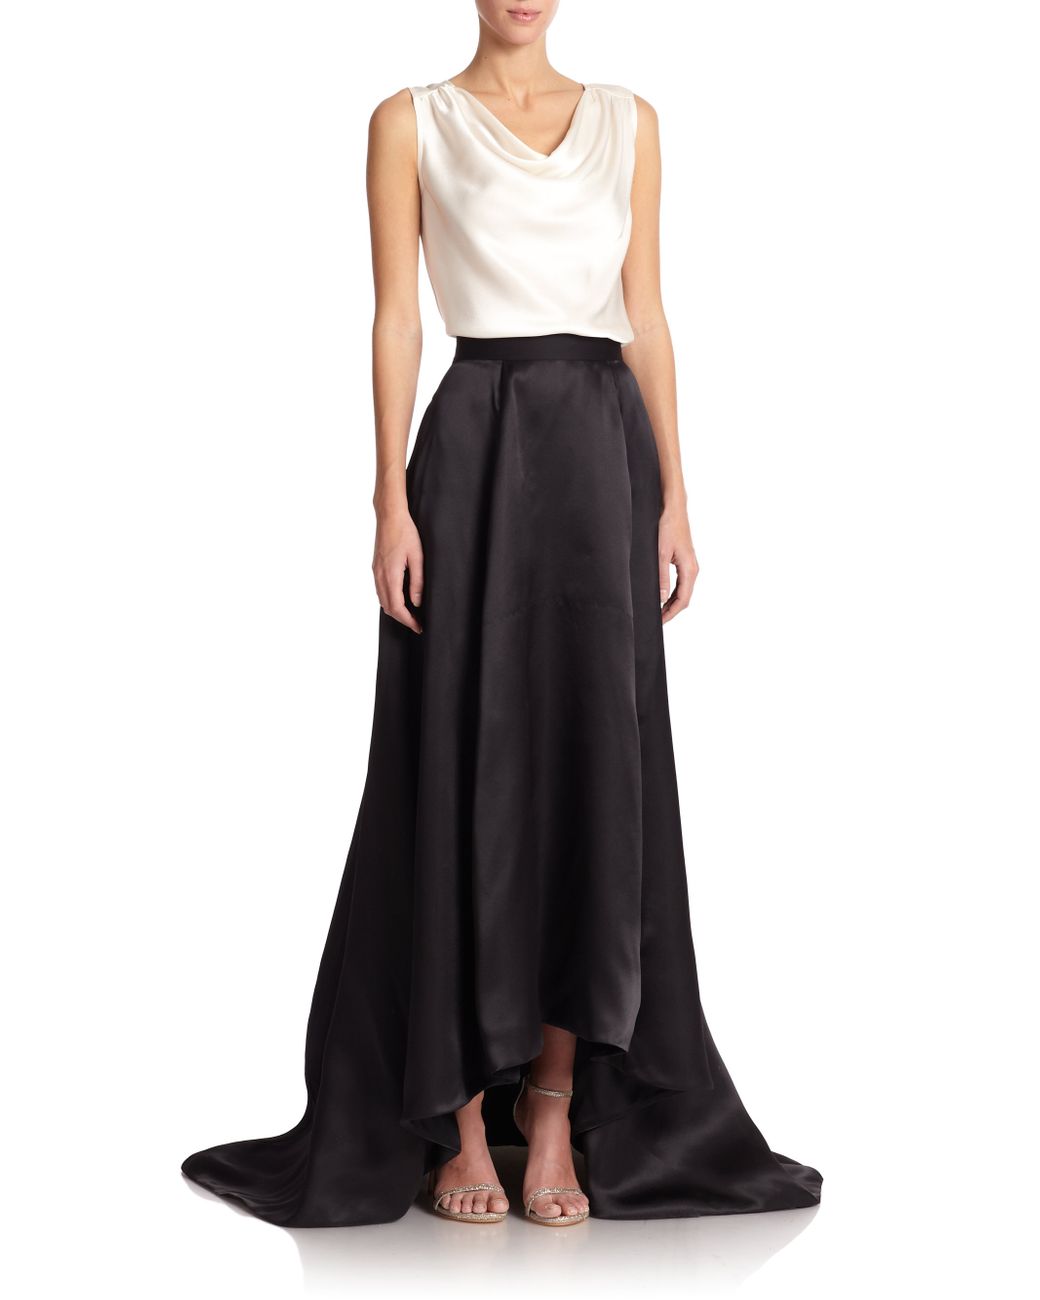 Custom Made Black Duchess Satin Ball Gown Skirt Long Full  Etsy  Ball  gown skirt Ball skirt Ball gowns